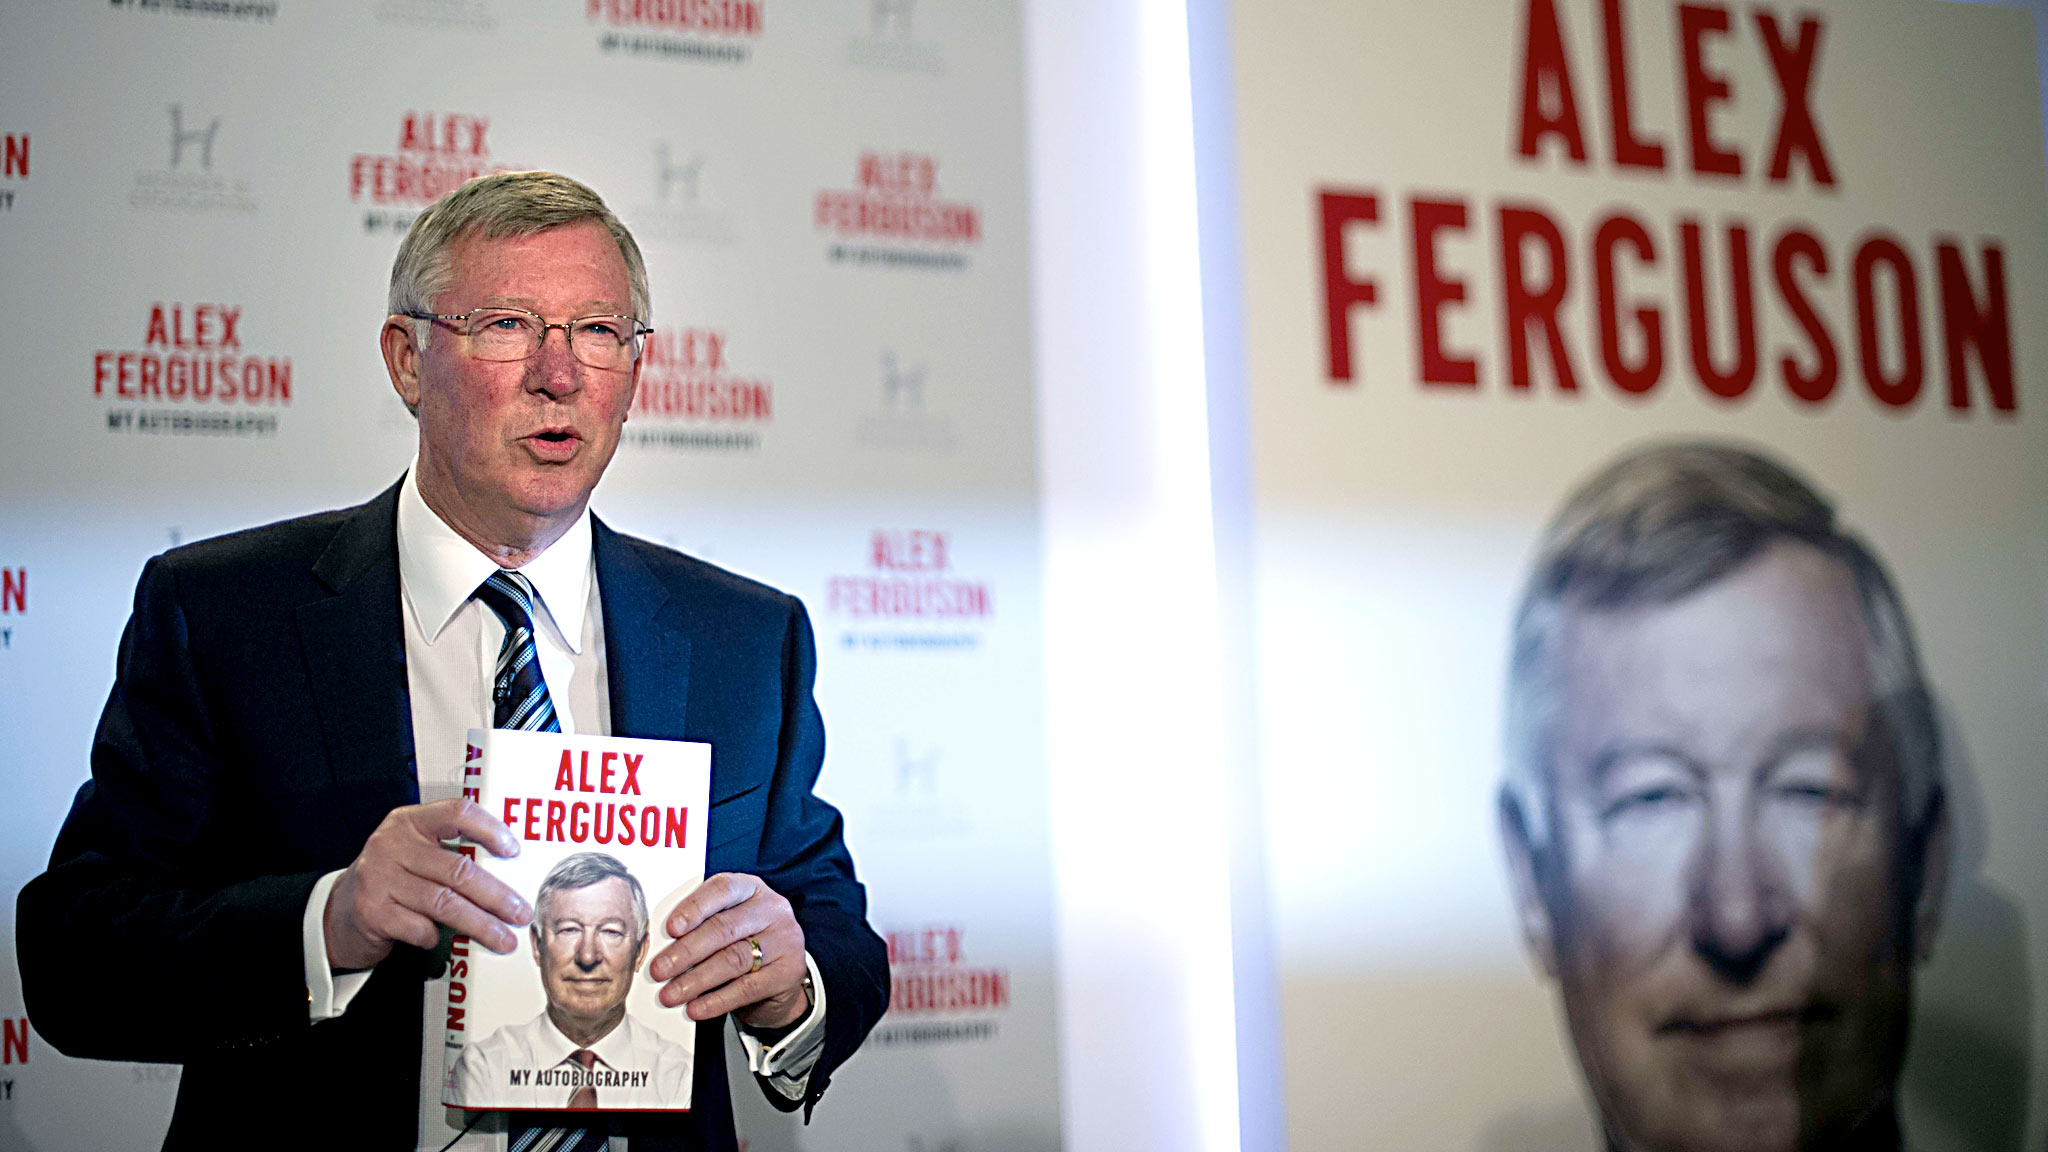 Sir Alex Ferguson Imparts His Management Wisdom - Alex Ferguson Kniha , HD Wallpaper & Backgrounds